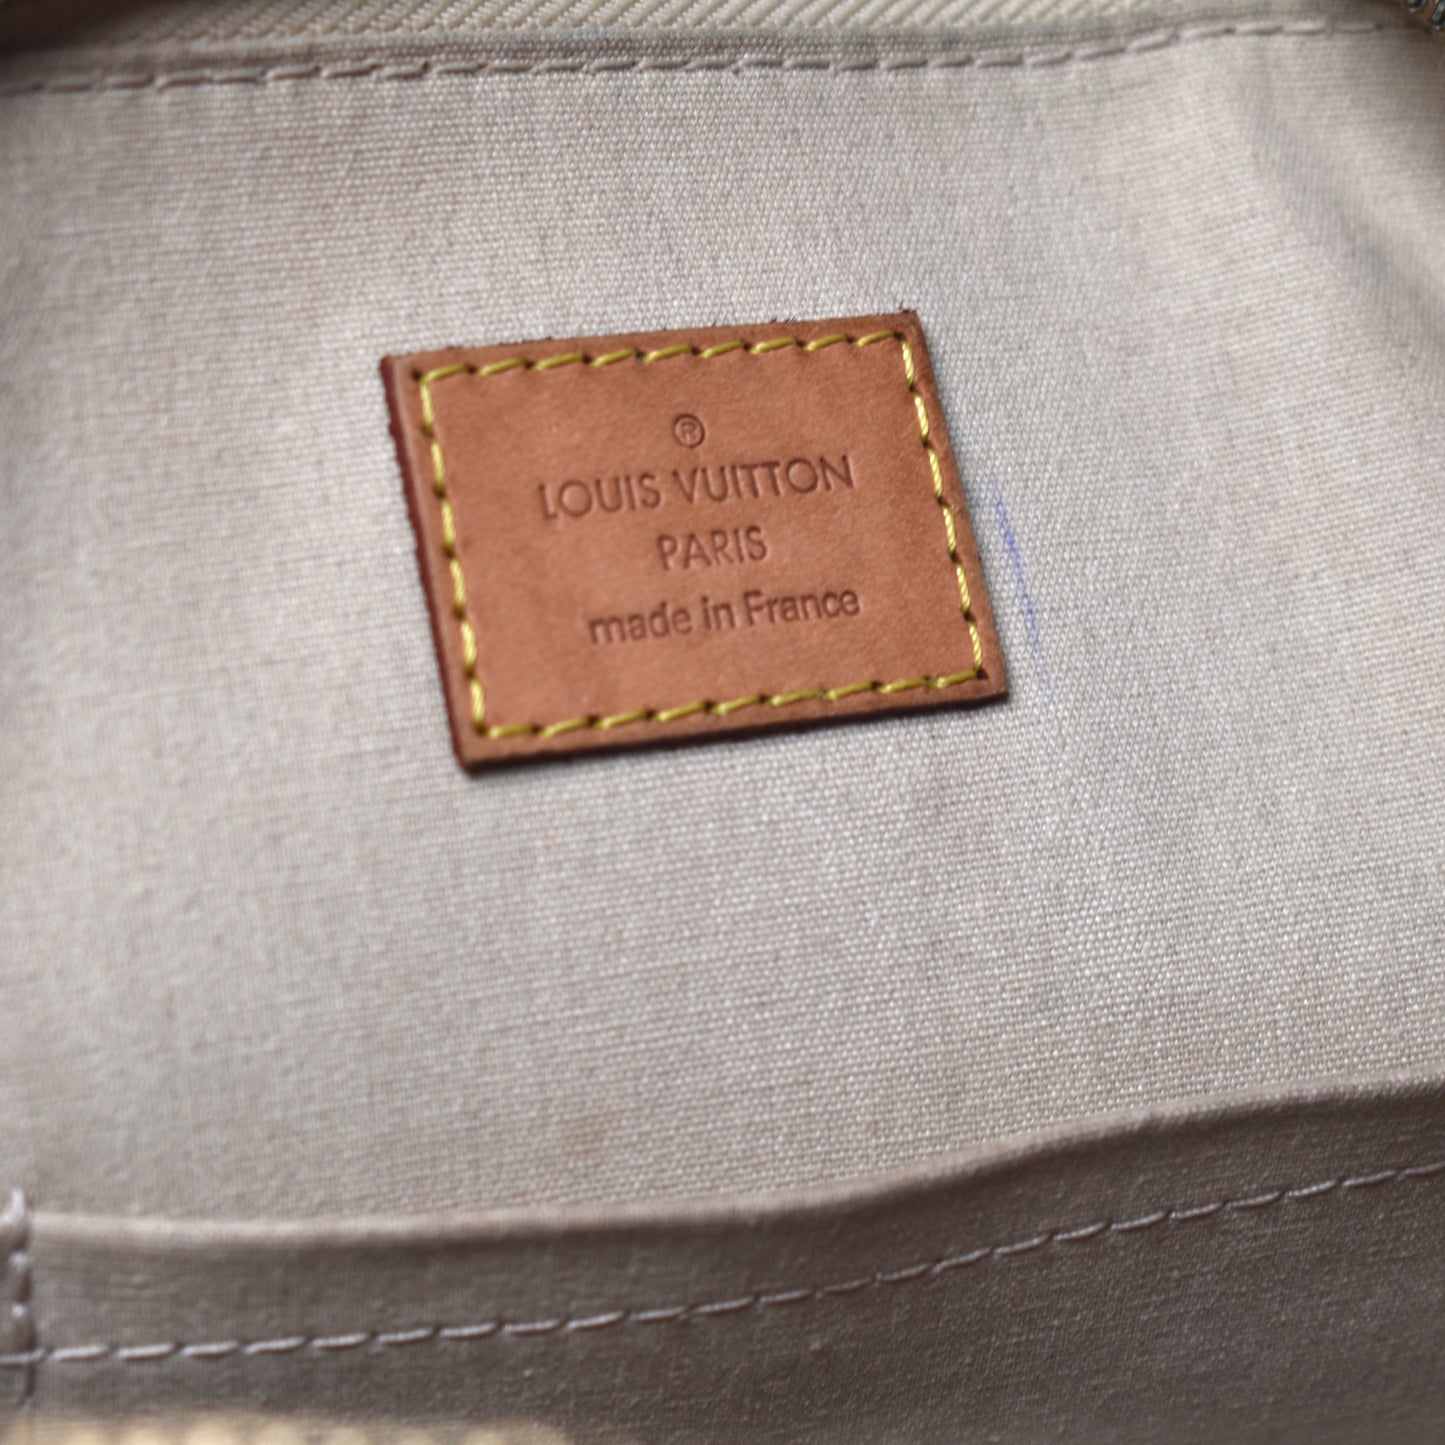 lv patent leather bag